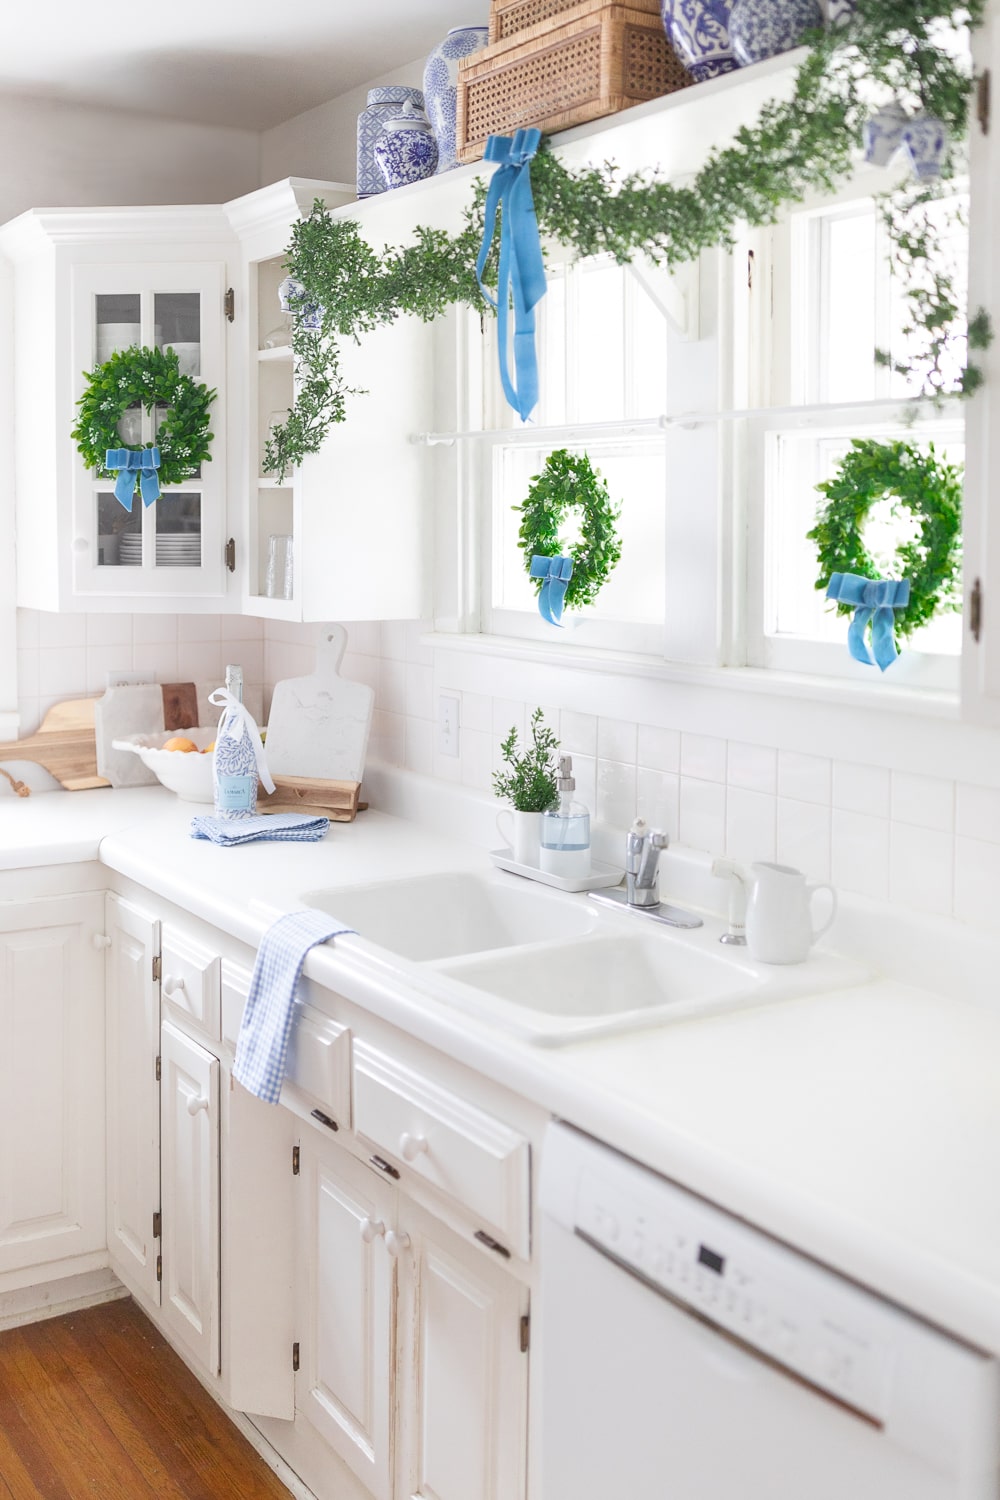 Southern lifestyle blogger Stephanie Ziajka shares her coastal Christmas kitchen decor on Diary of a Debutante